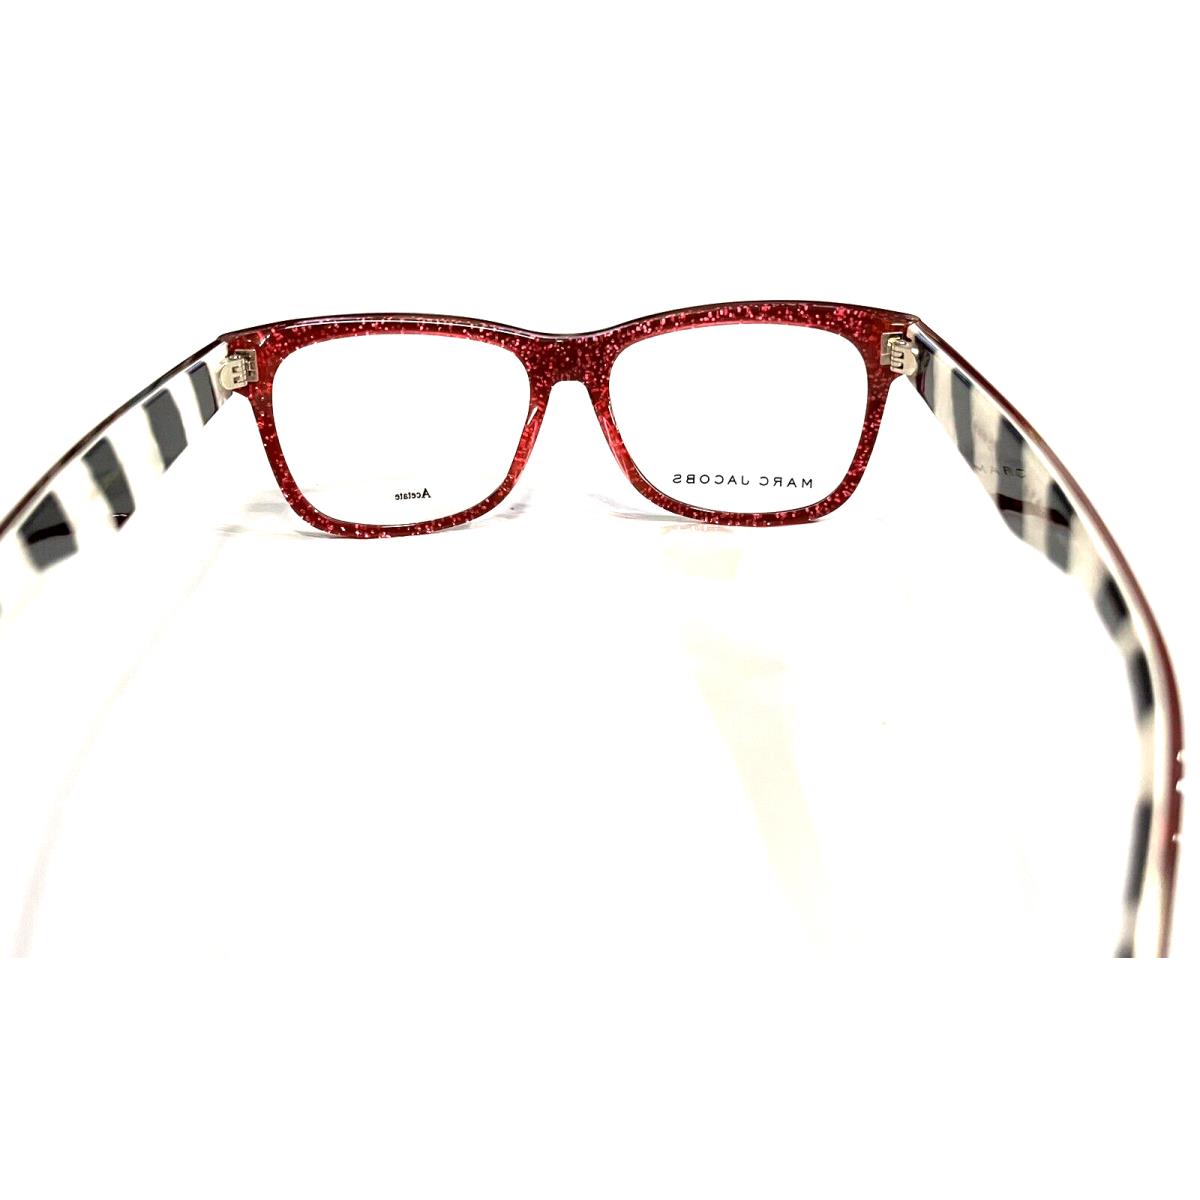 Marc Jacobs eyeglasses OSW - Burgundy Frame 3